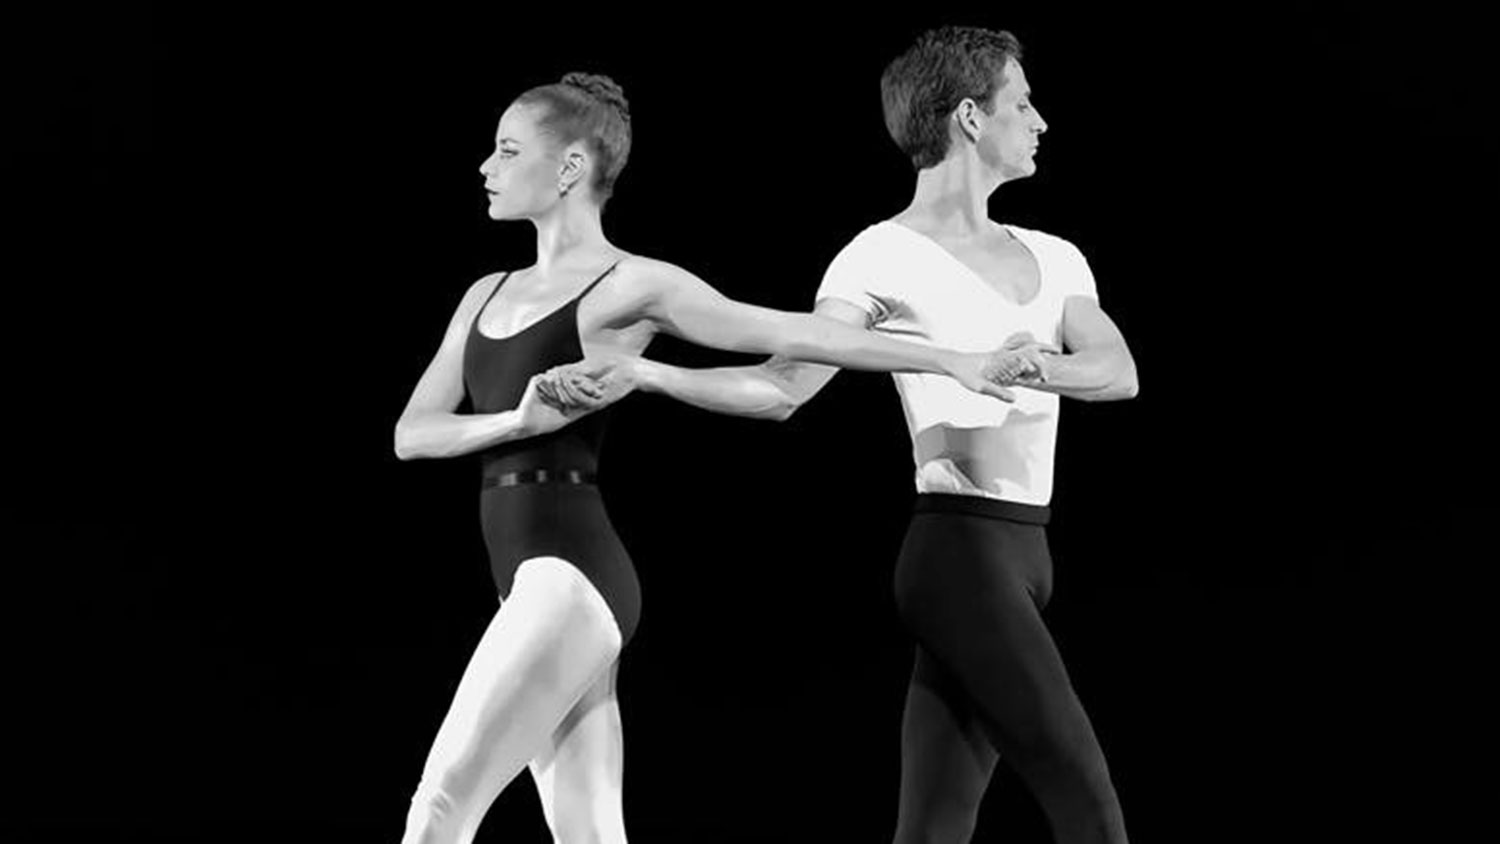 Two ballerinas posing